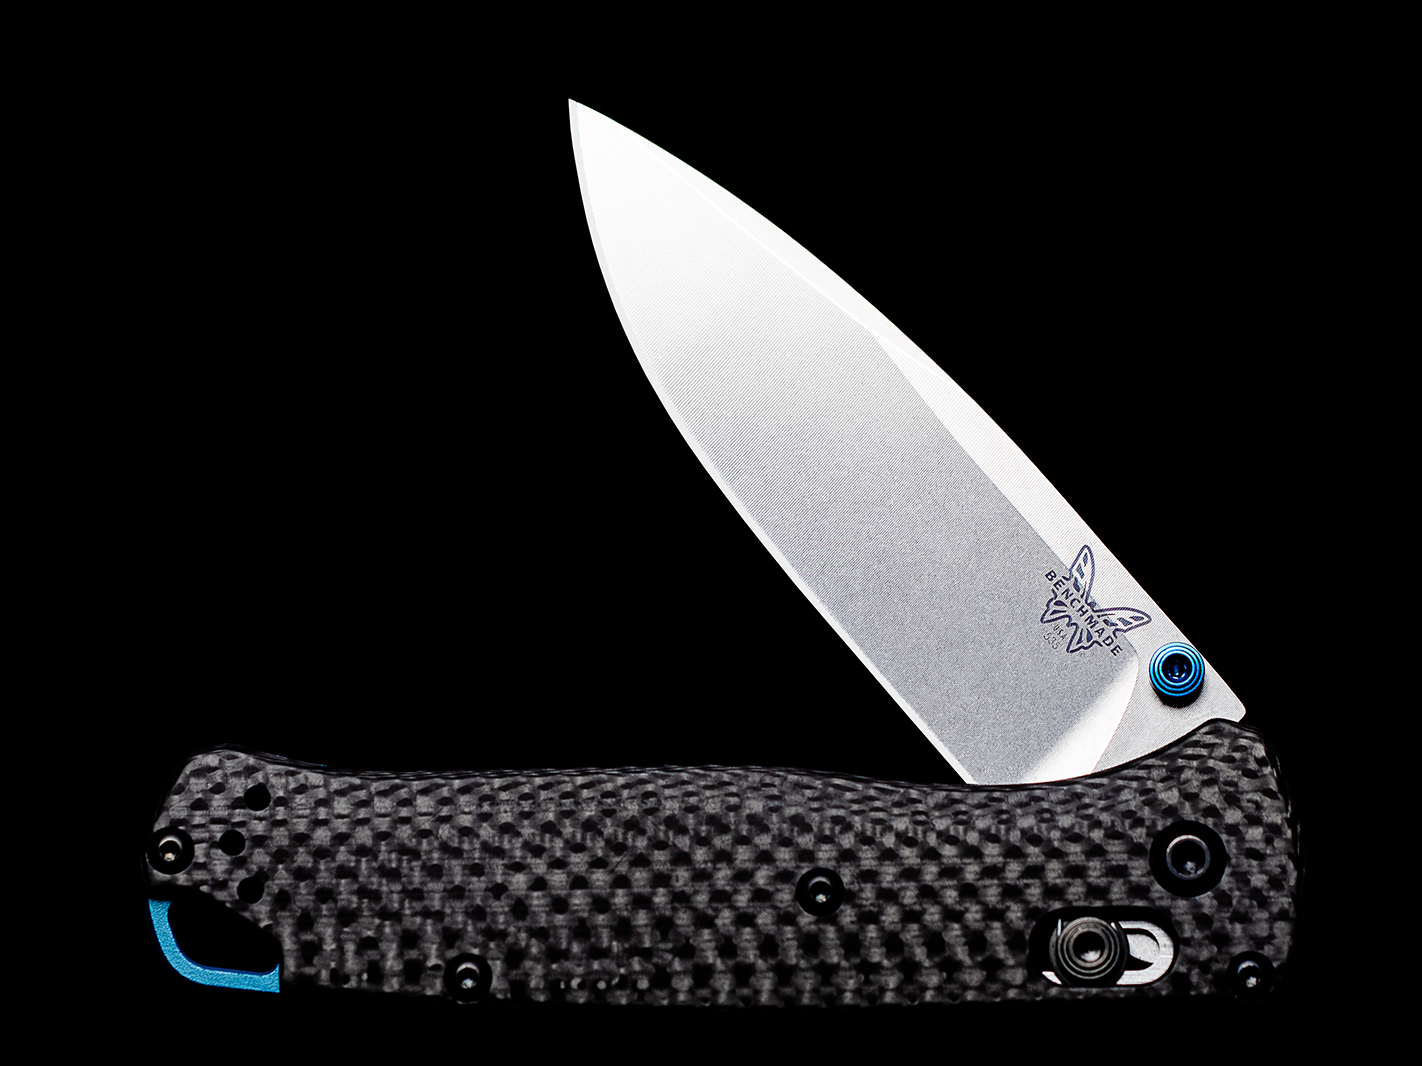 Benchmade Bugout folding knife in carbon fiber